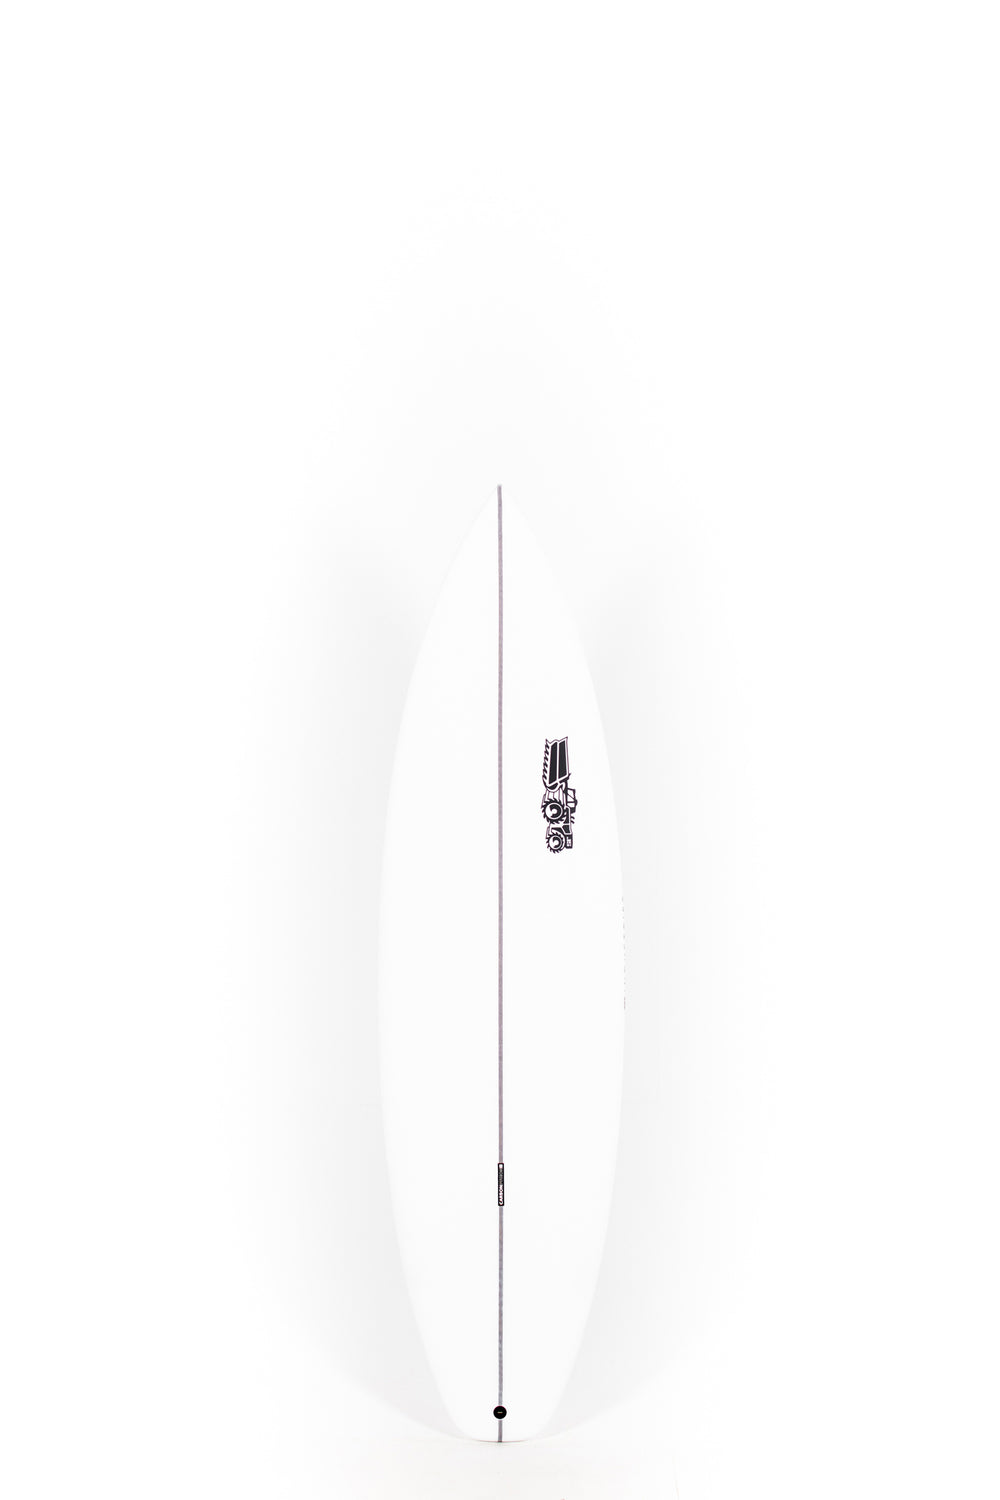 Pukas Surf Shop - JS Surfboards - MONSTA 2020 - 6'1